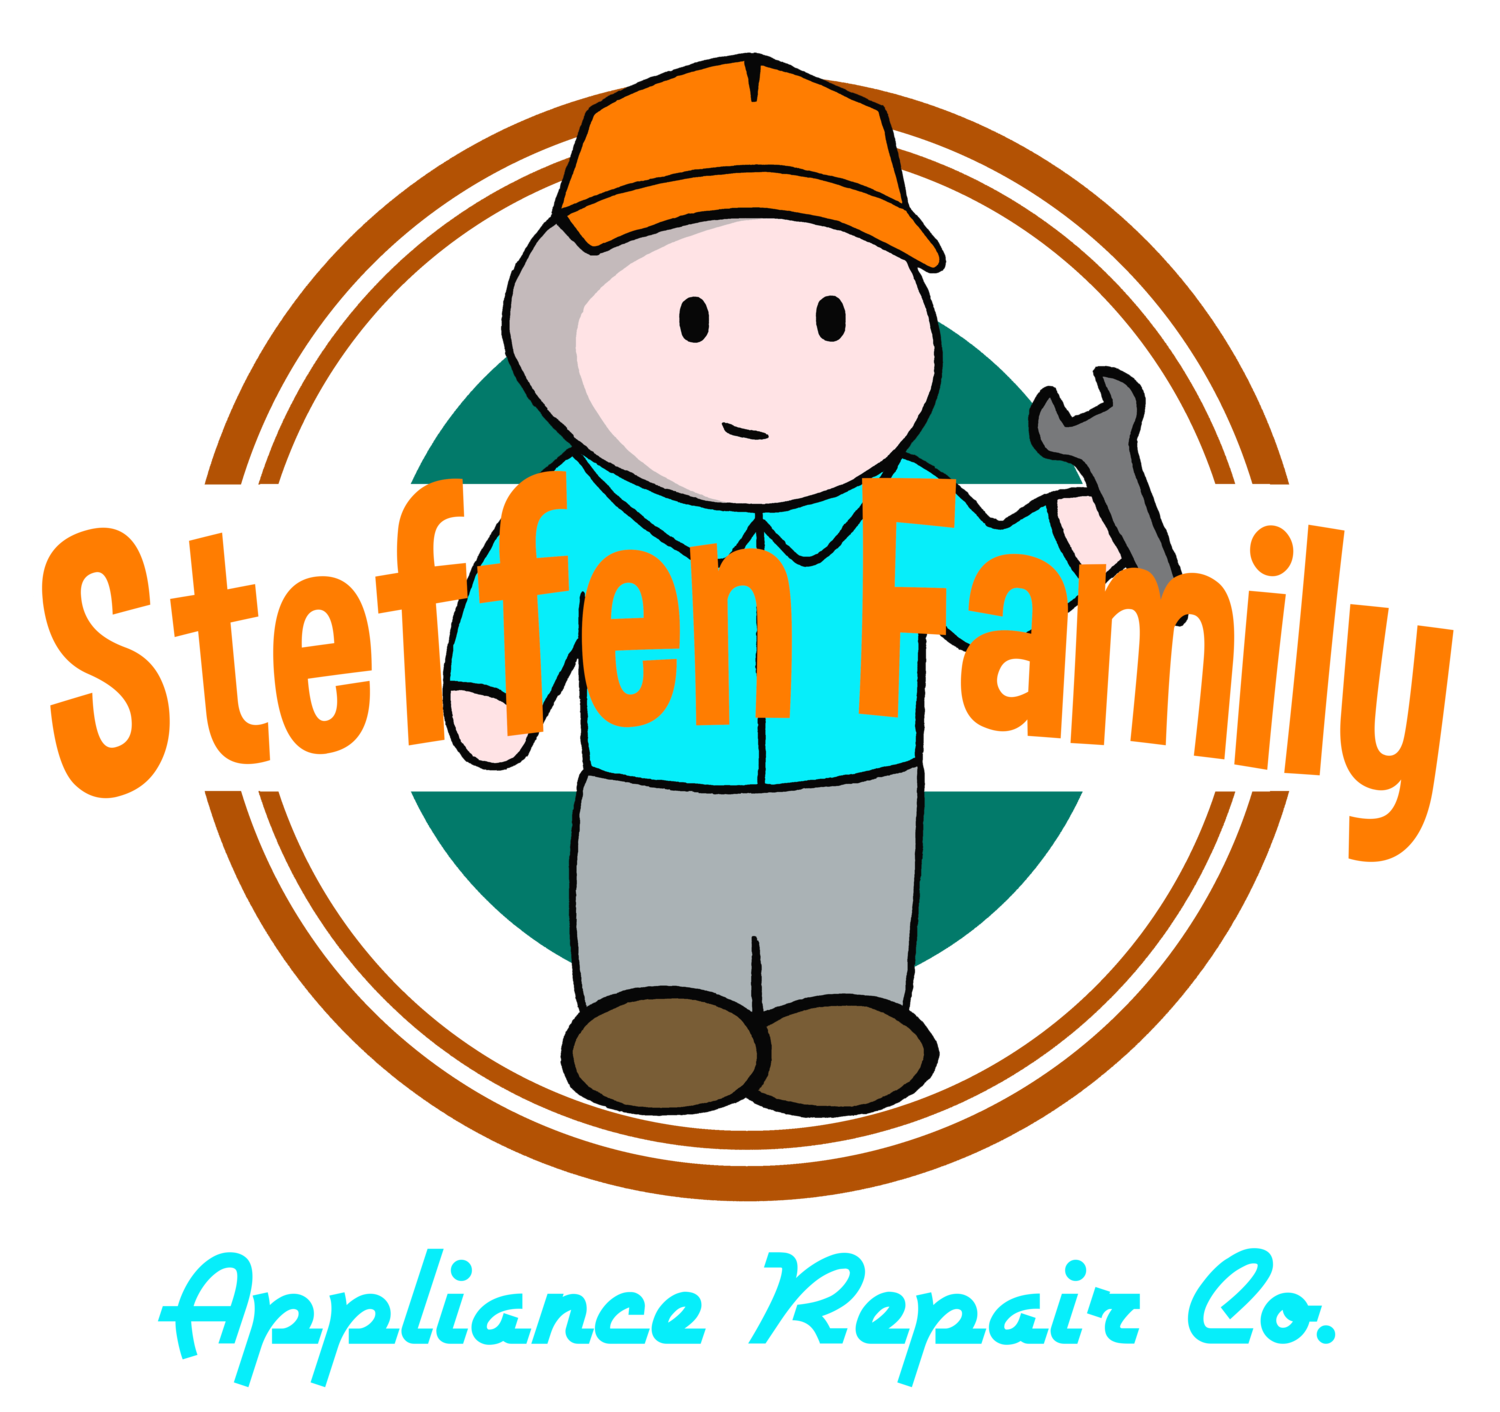 Steffen Family Appliance Repair Co.